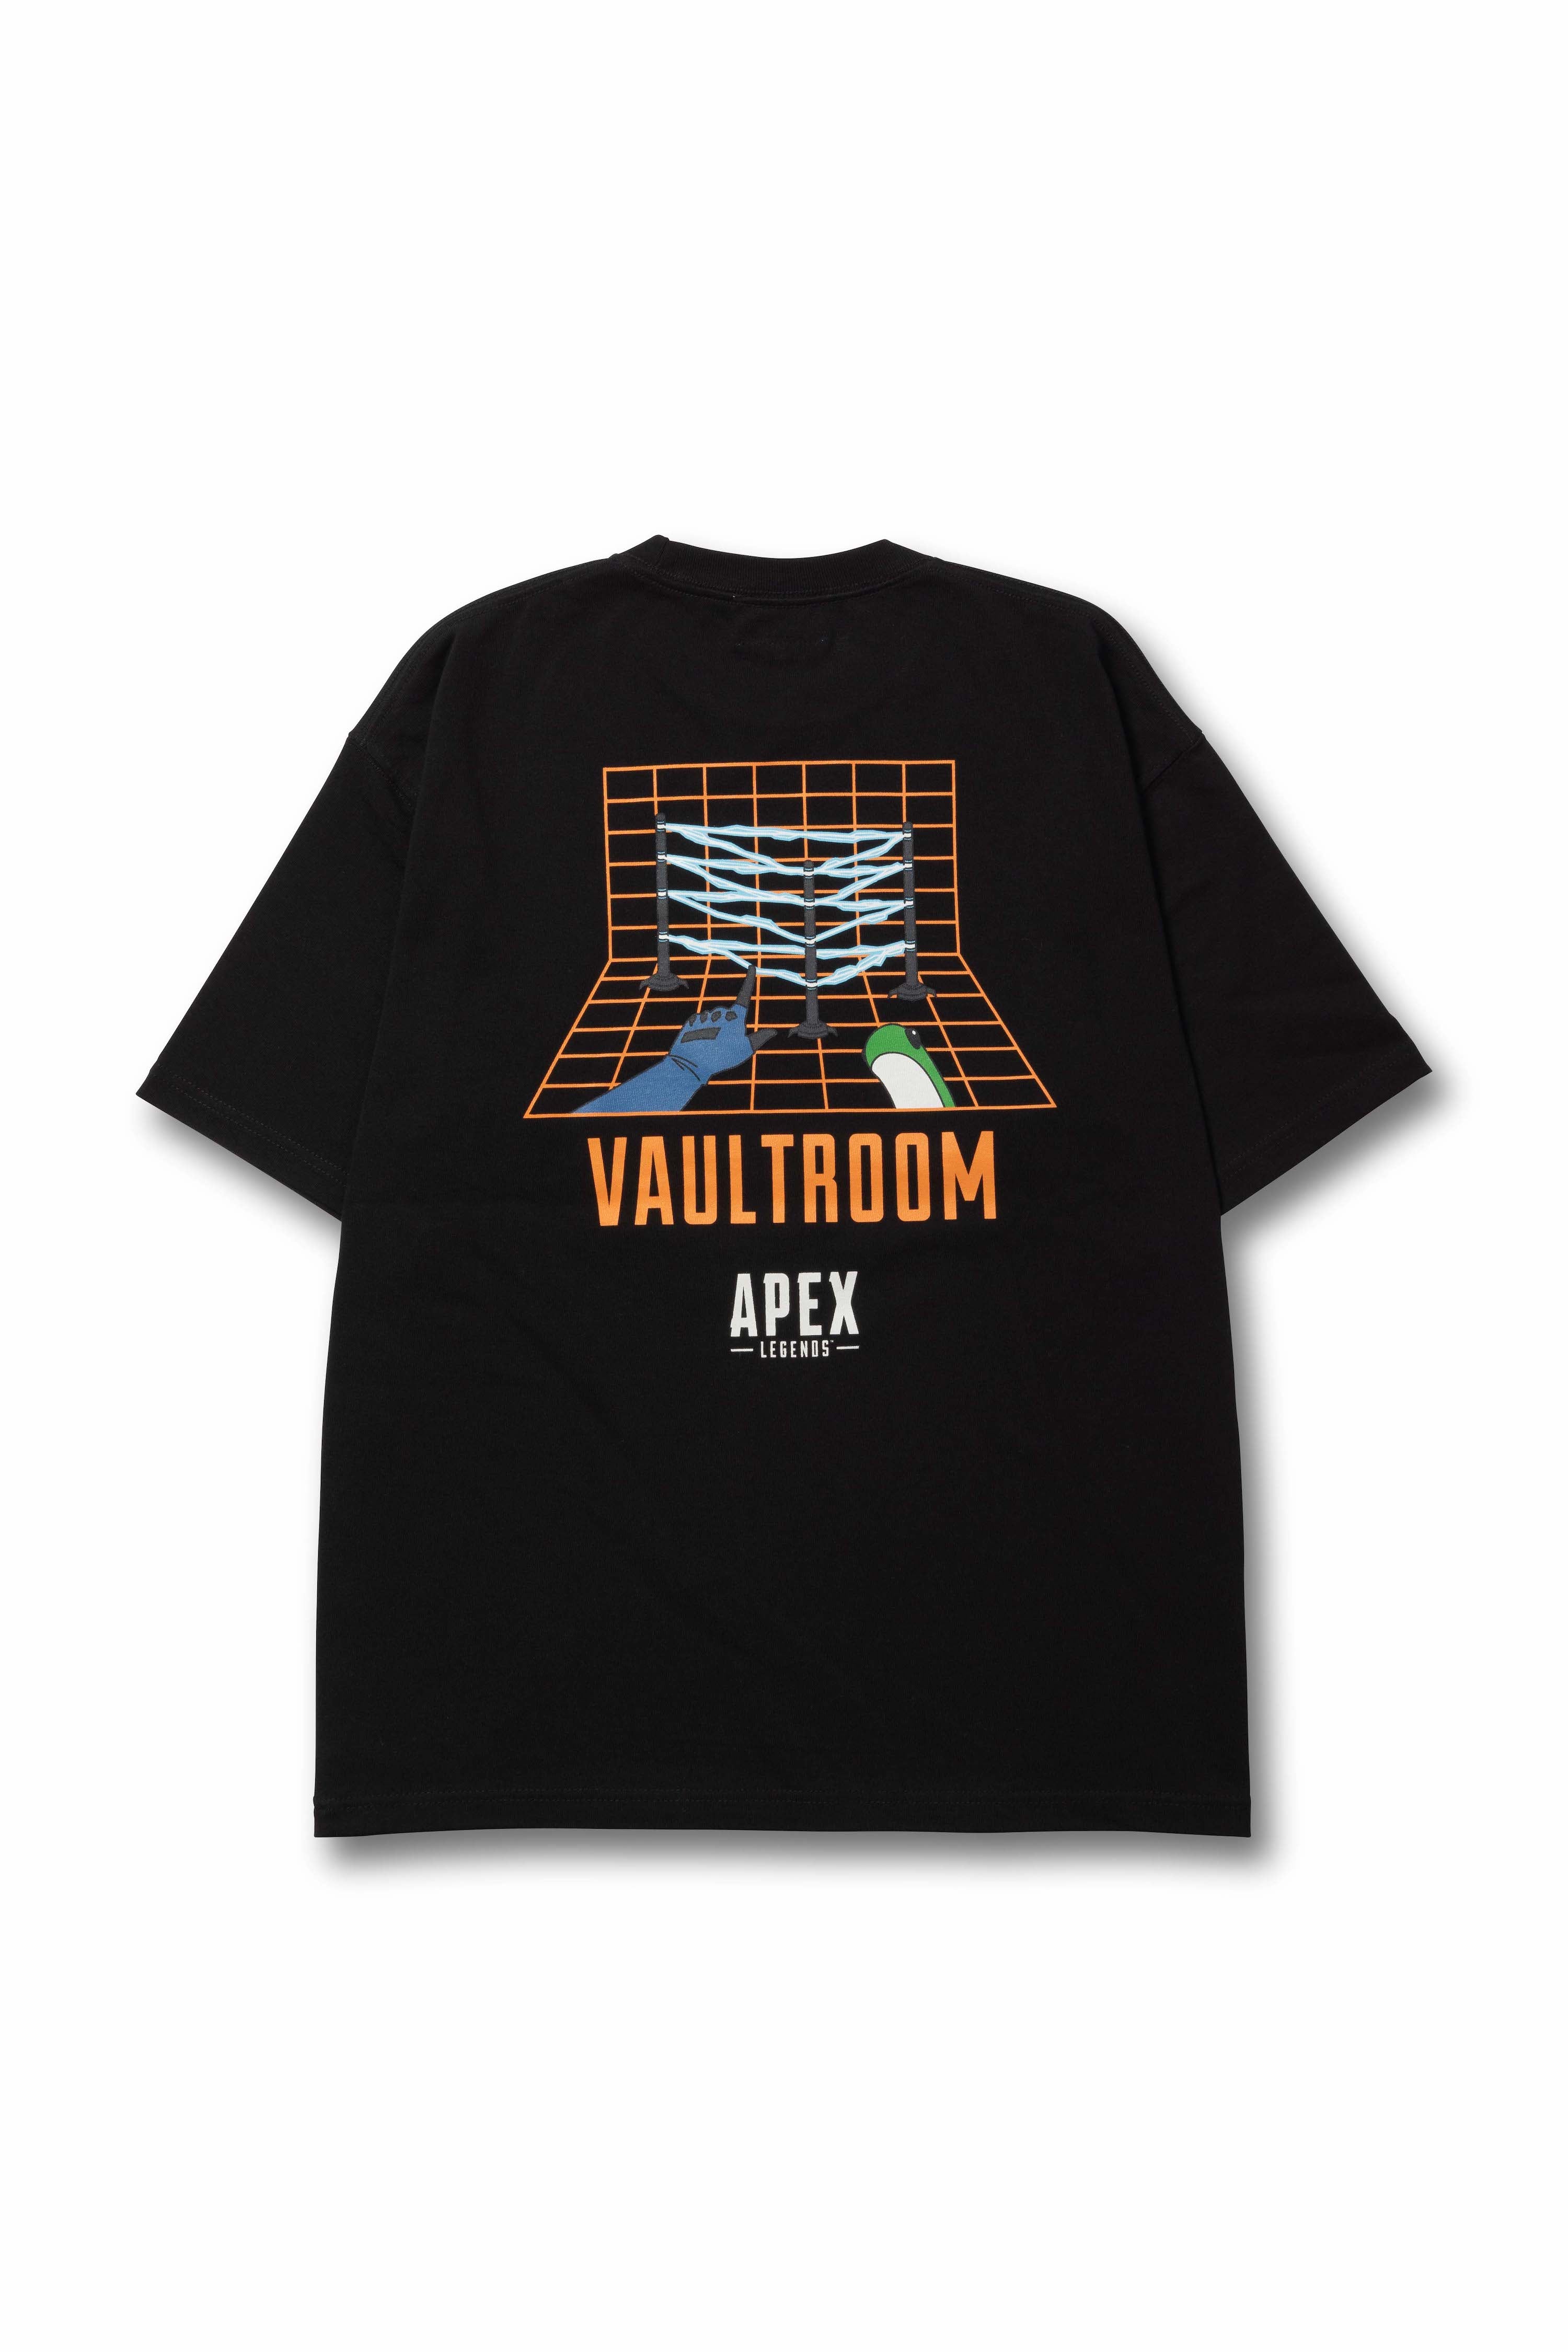 vaultroom Apex Legends Wattson Tシャツ L 新品